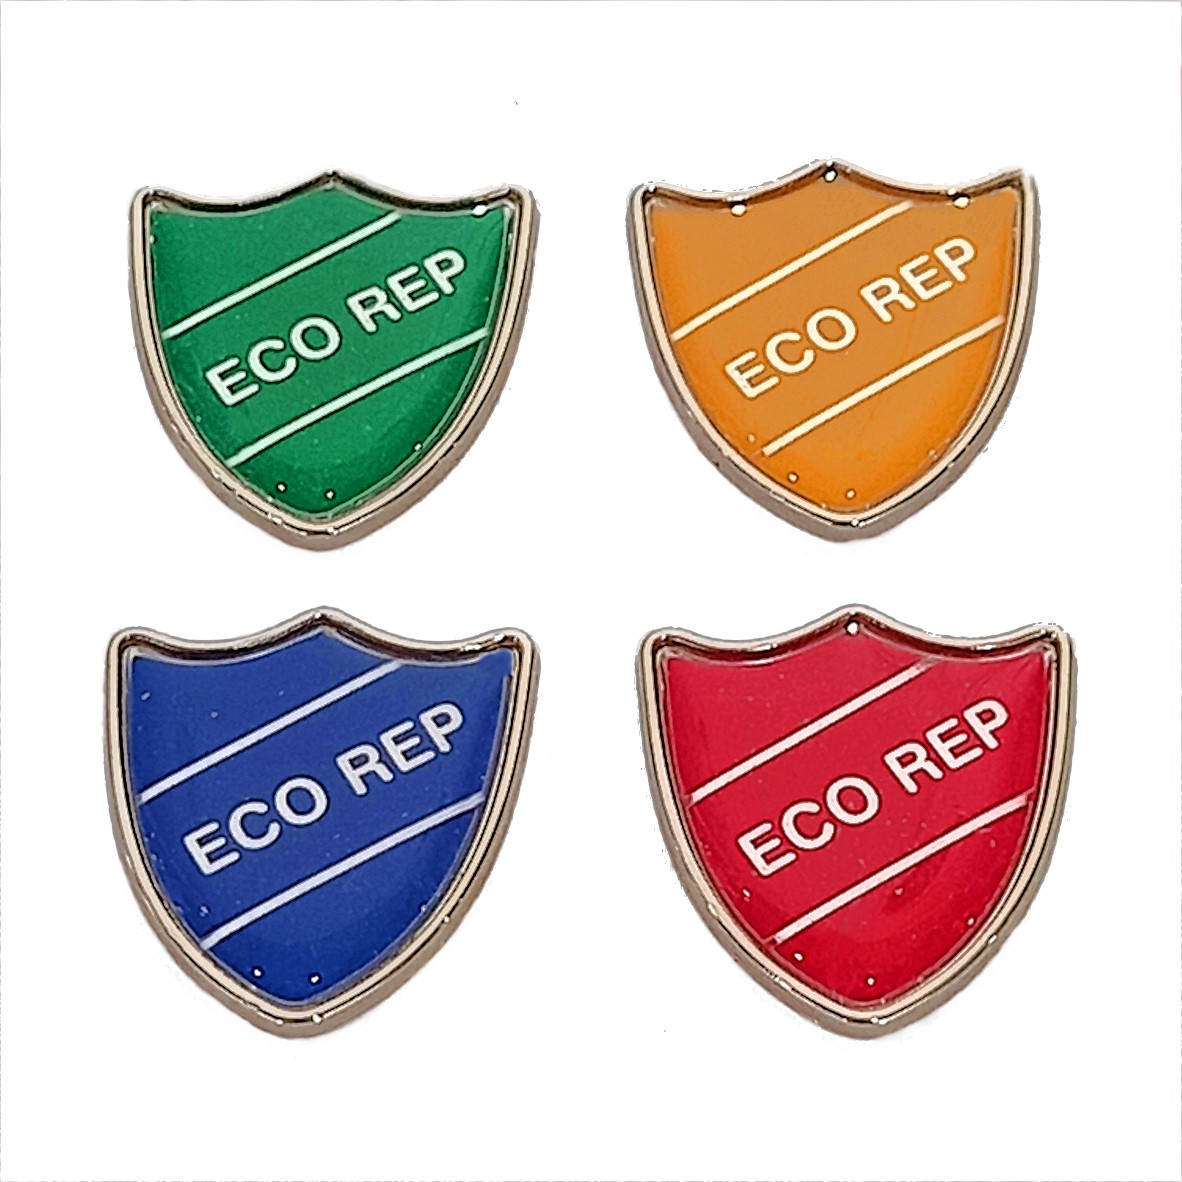 ECO REP shield badge